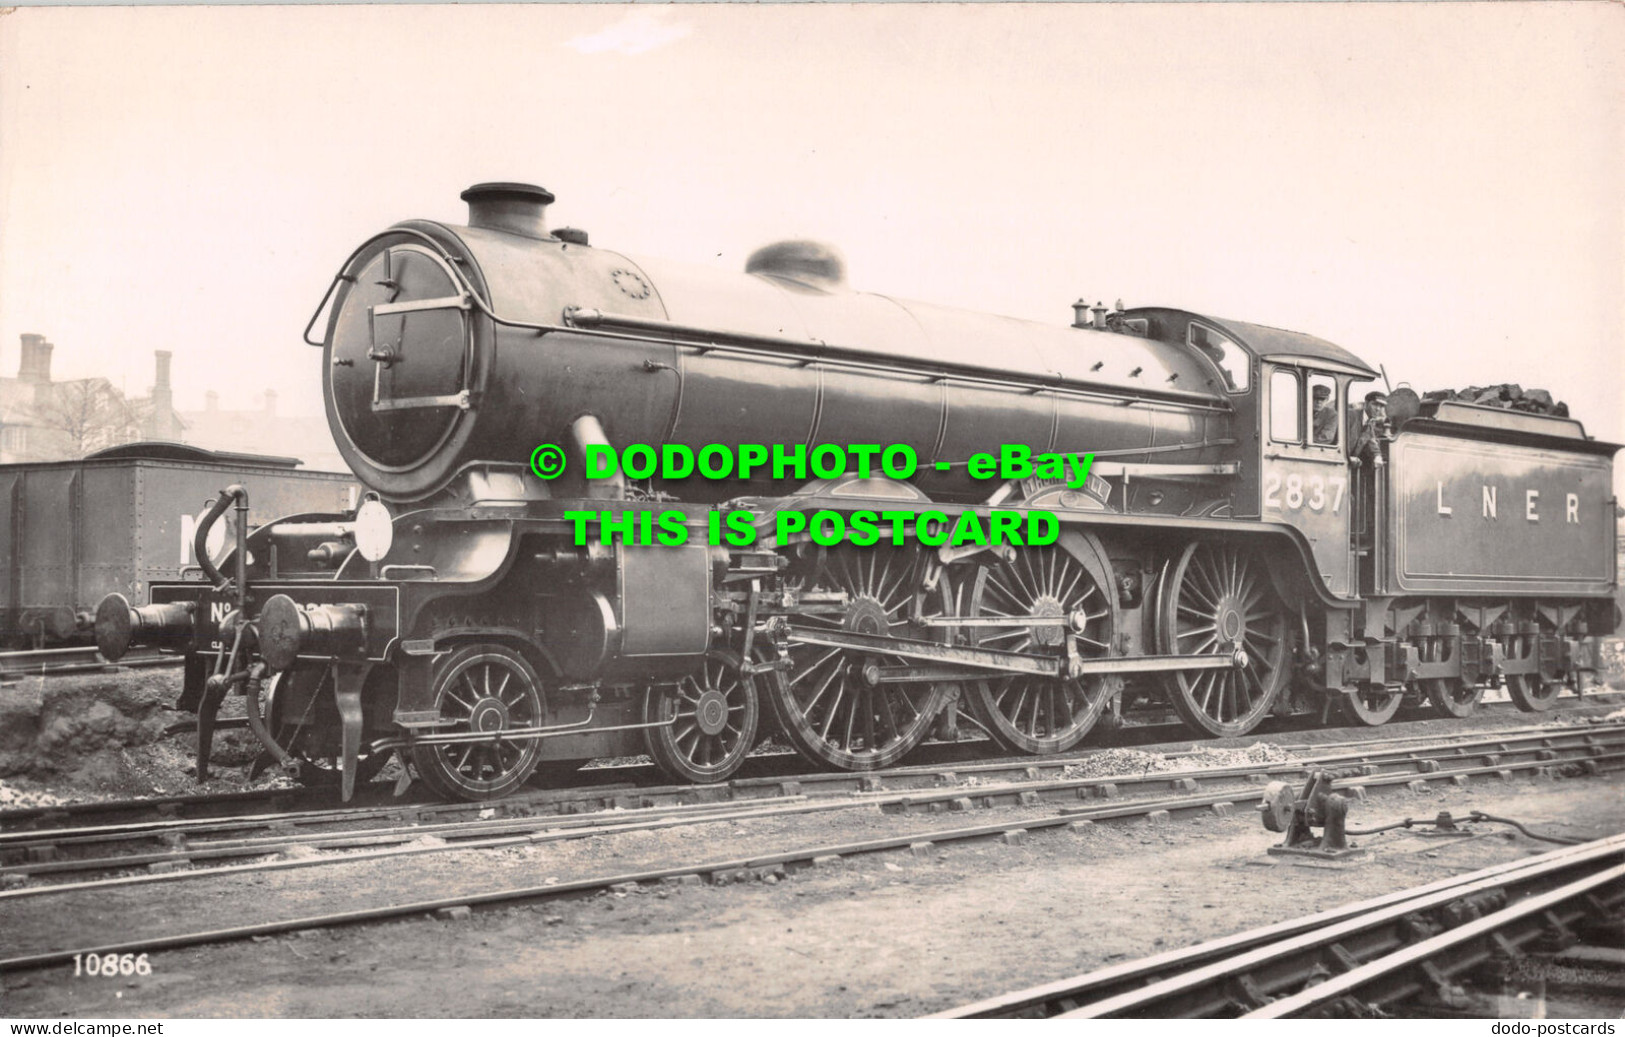 R506522 10866. 2837 LNER. Locomotive Or Train. Postcard - World